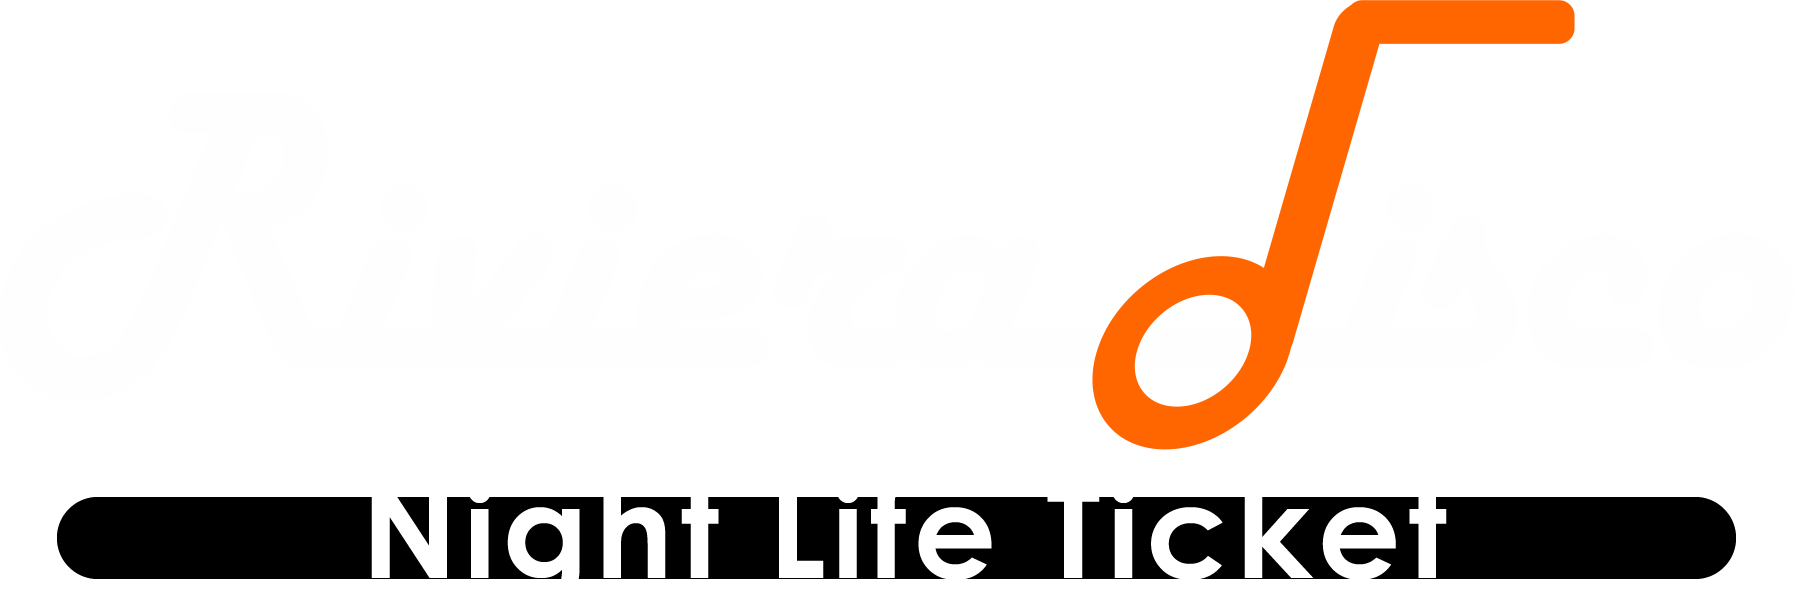 Night Life Ticket